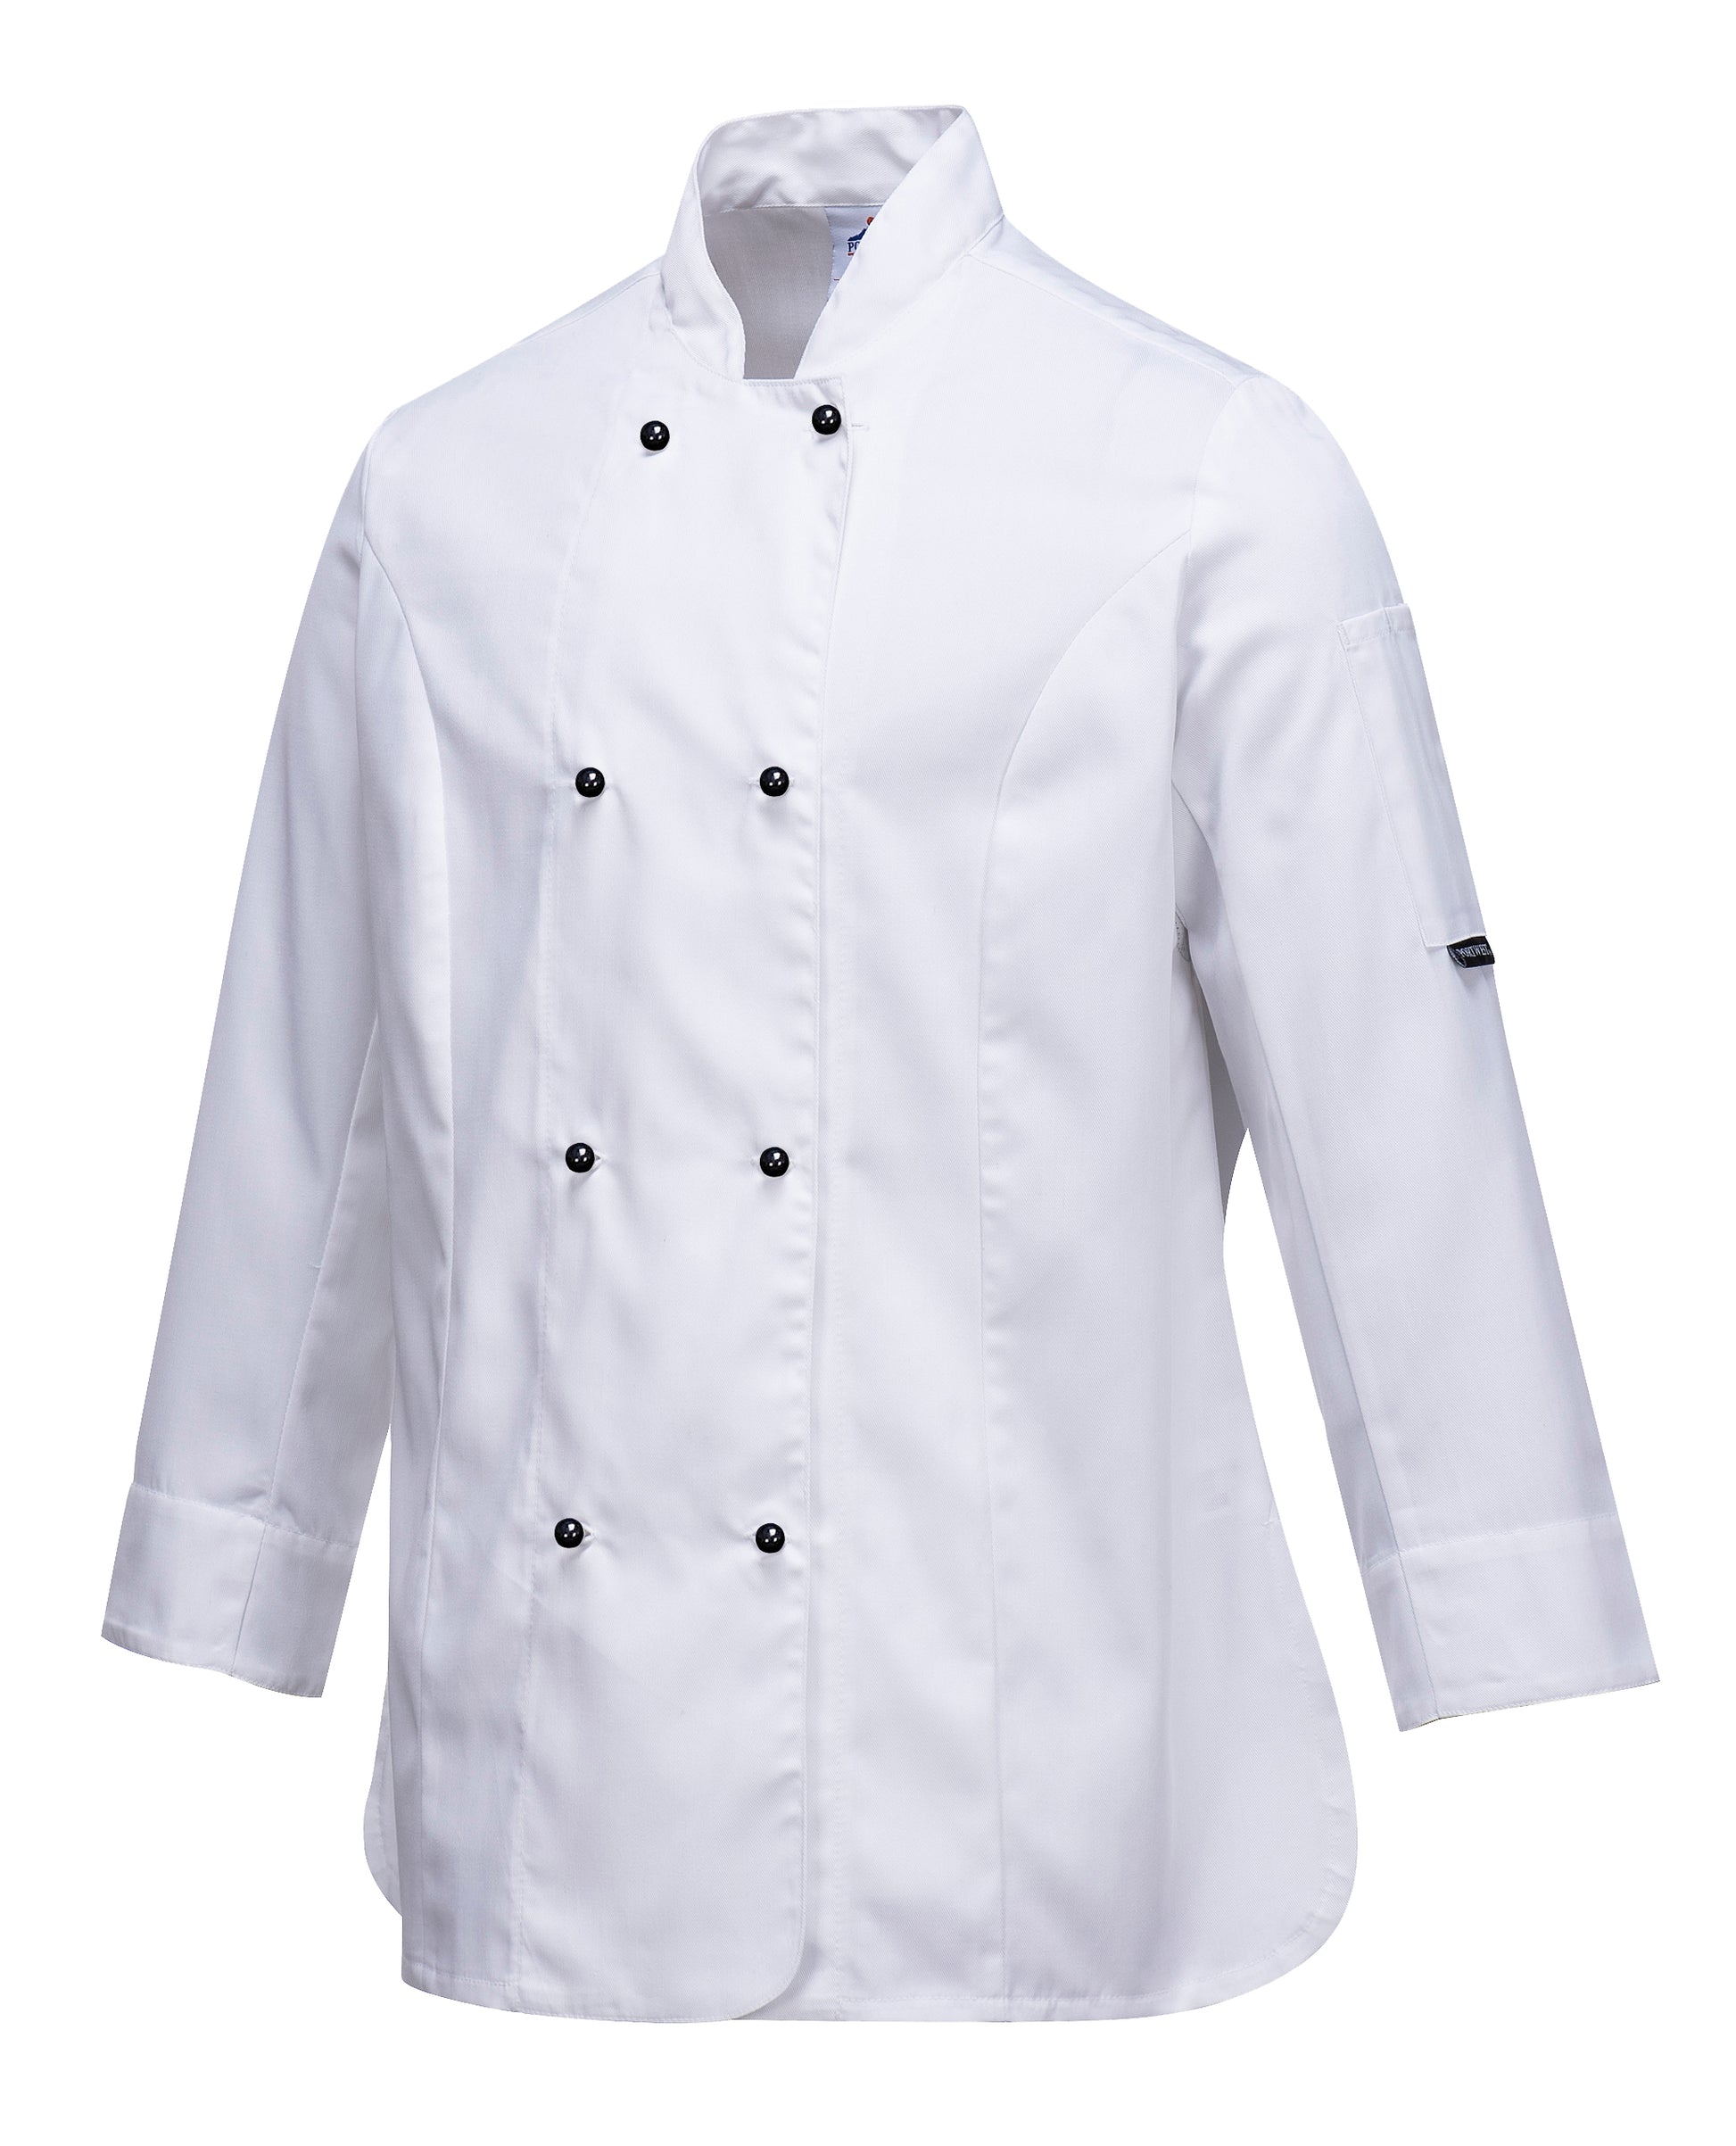 Rachel Chef Jacket L/S White - C837 Side